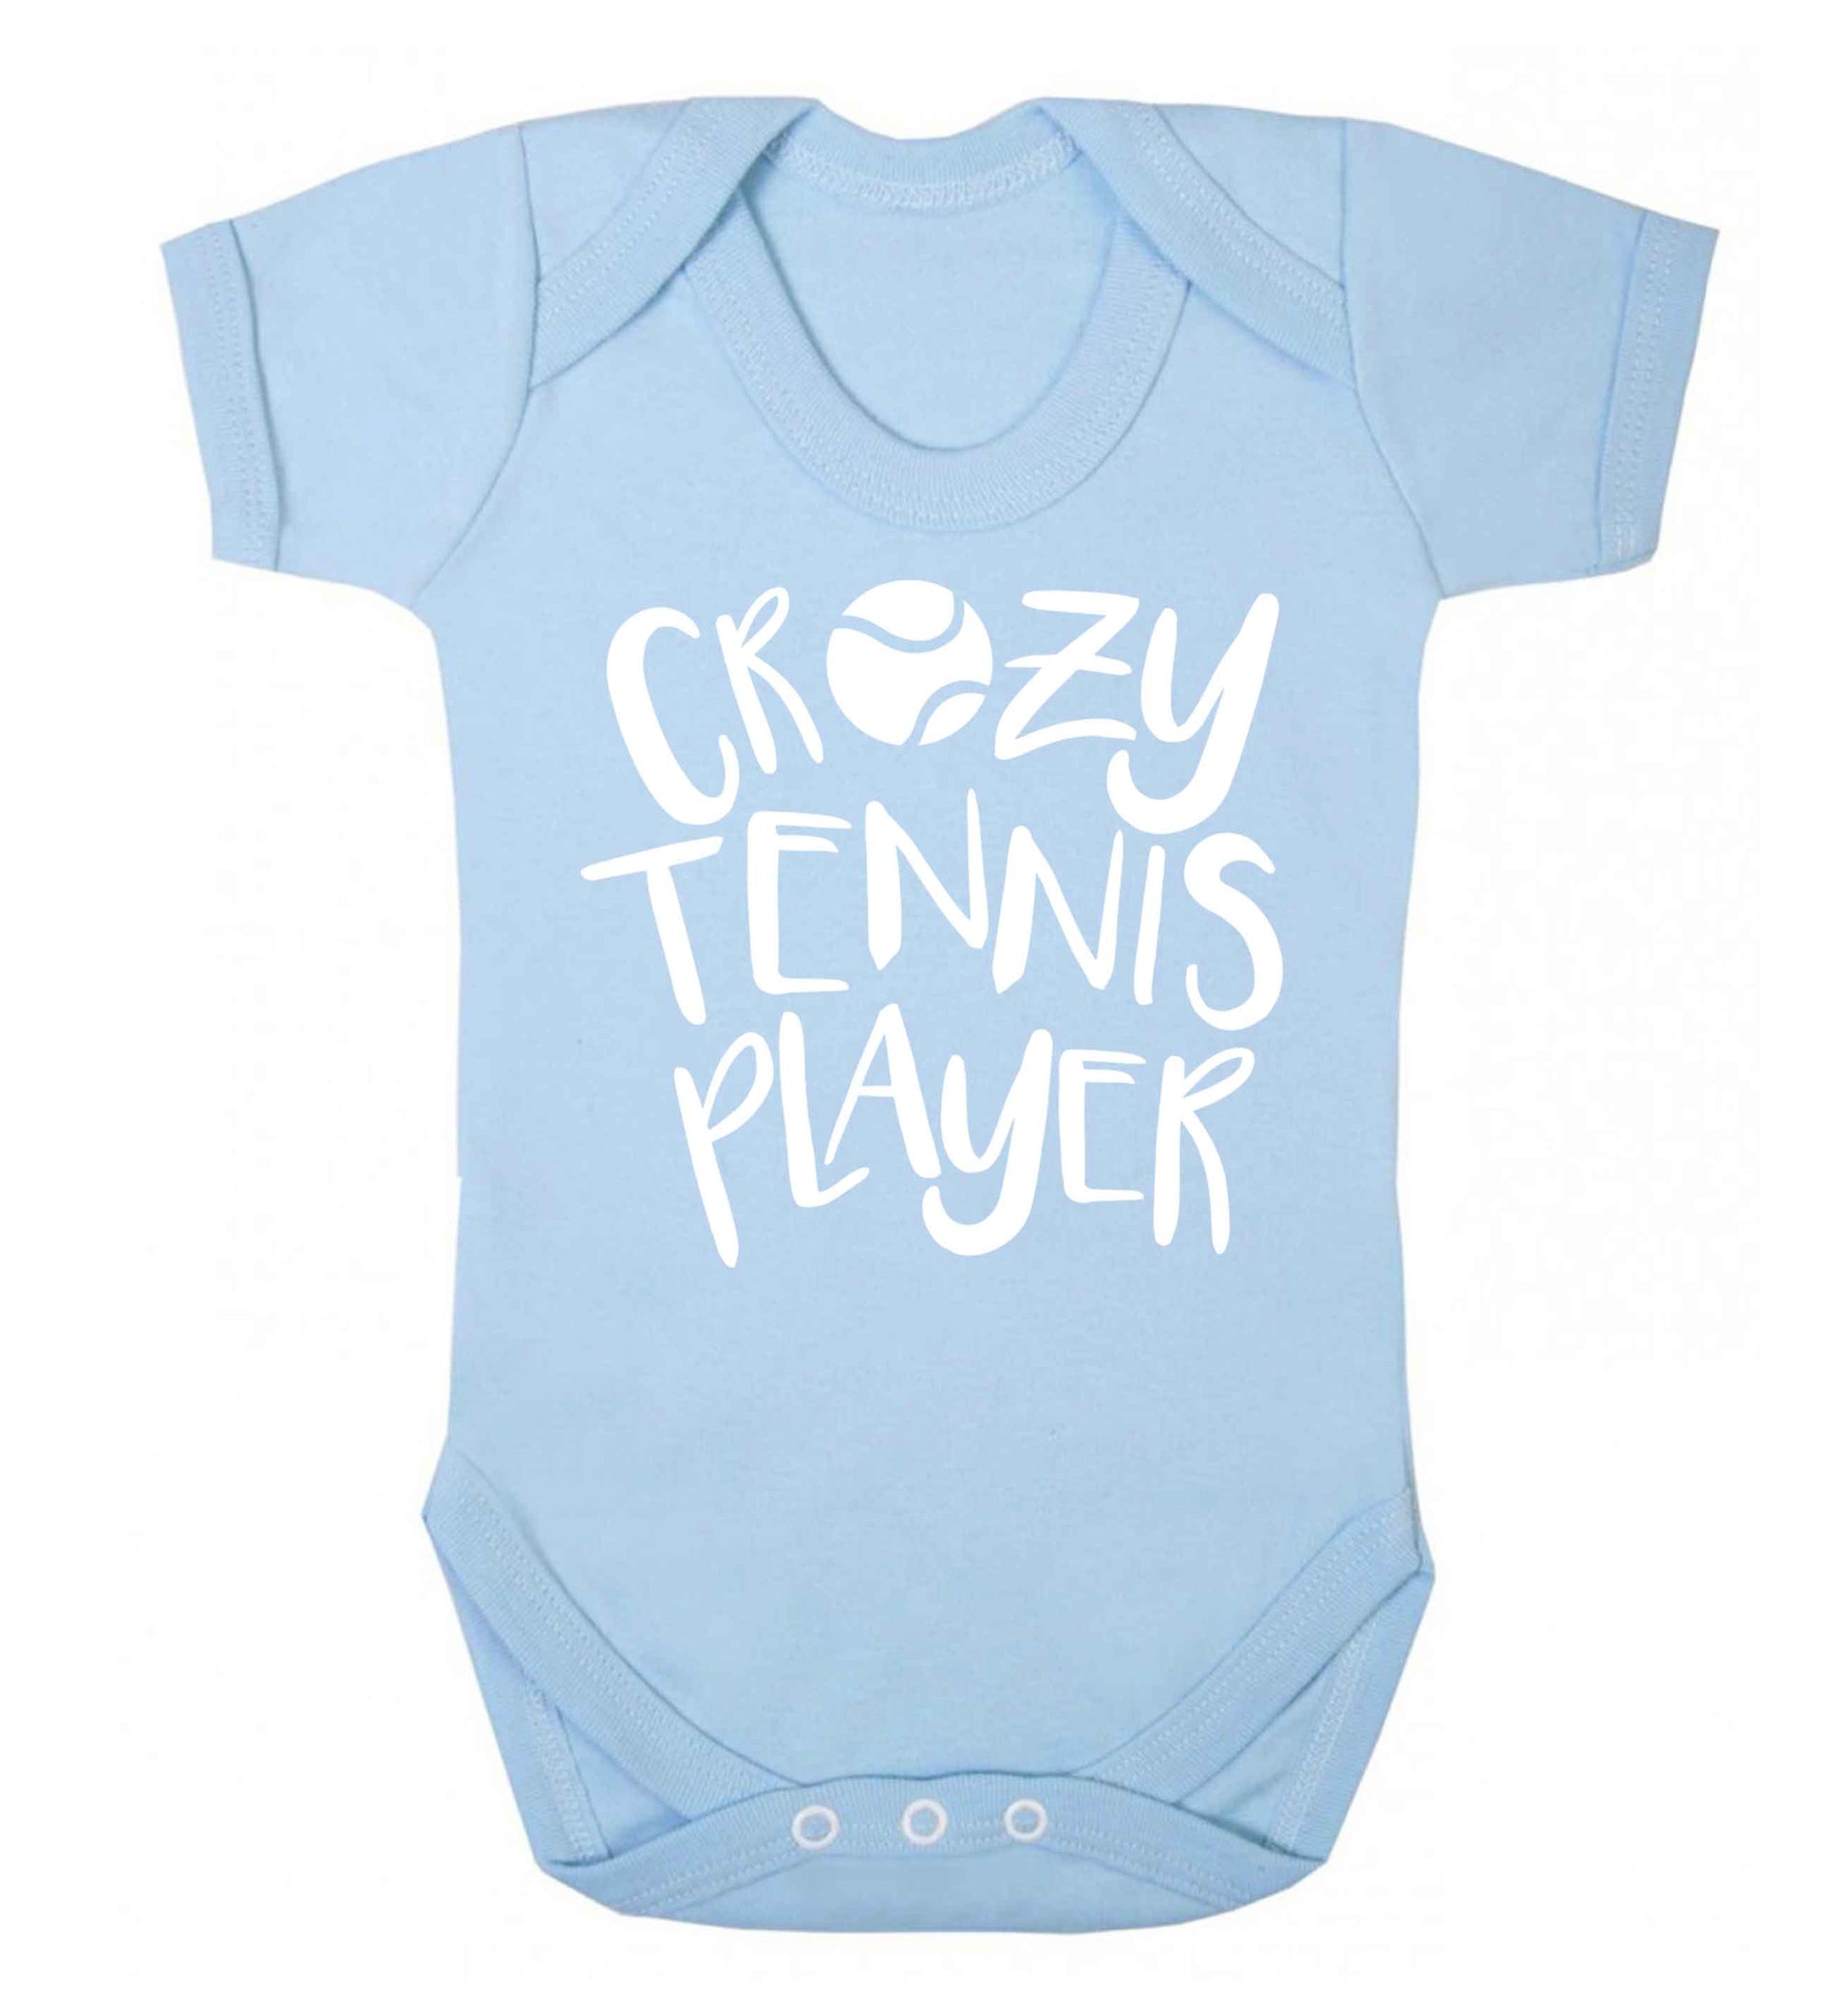 Crazy tennis player Baby Vest pale blue 18-24 months